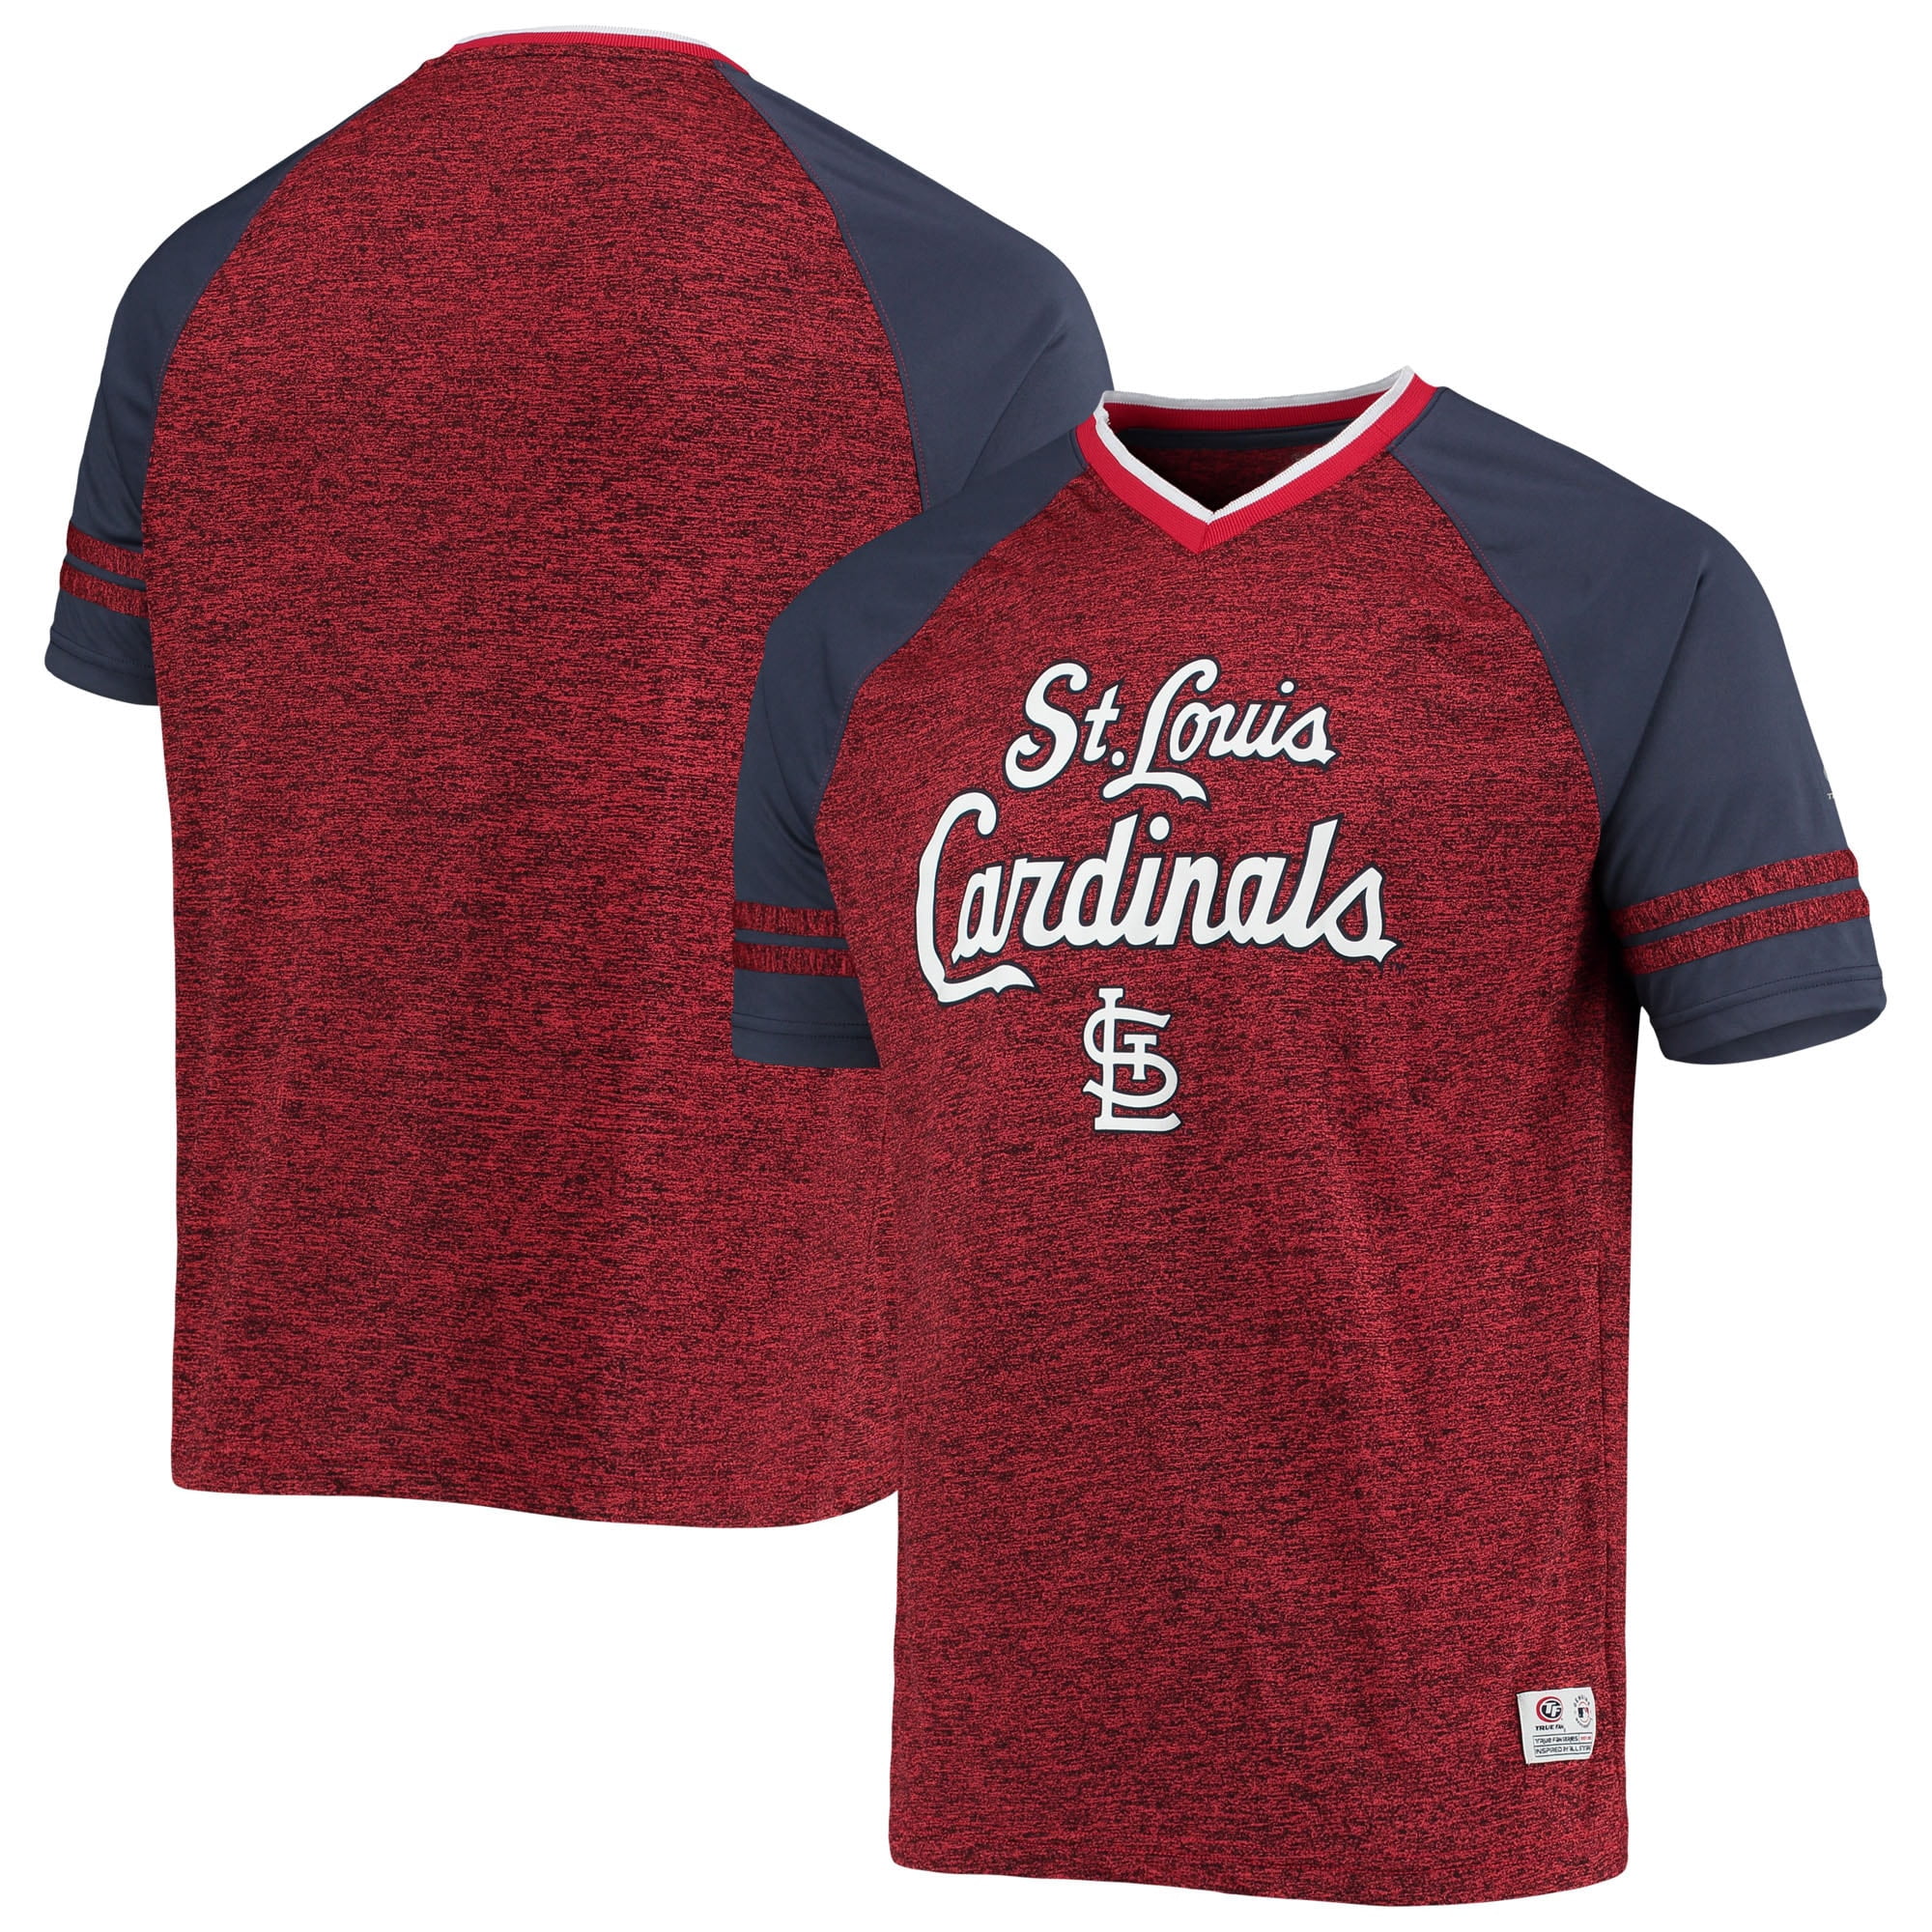 St. Louis Cardinals Active Jerseys for Men